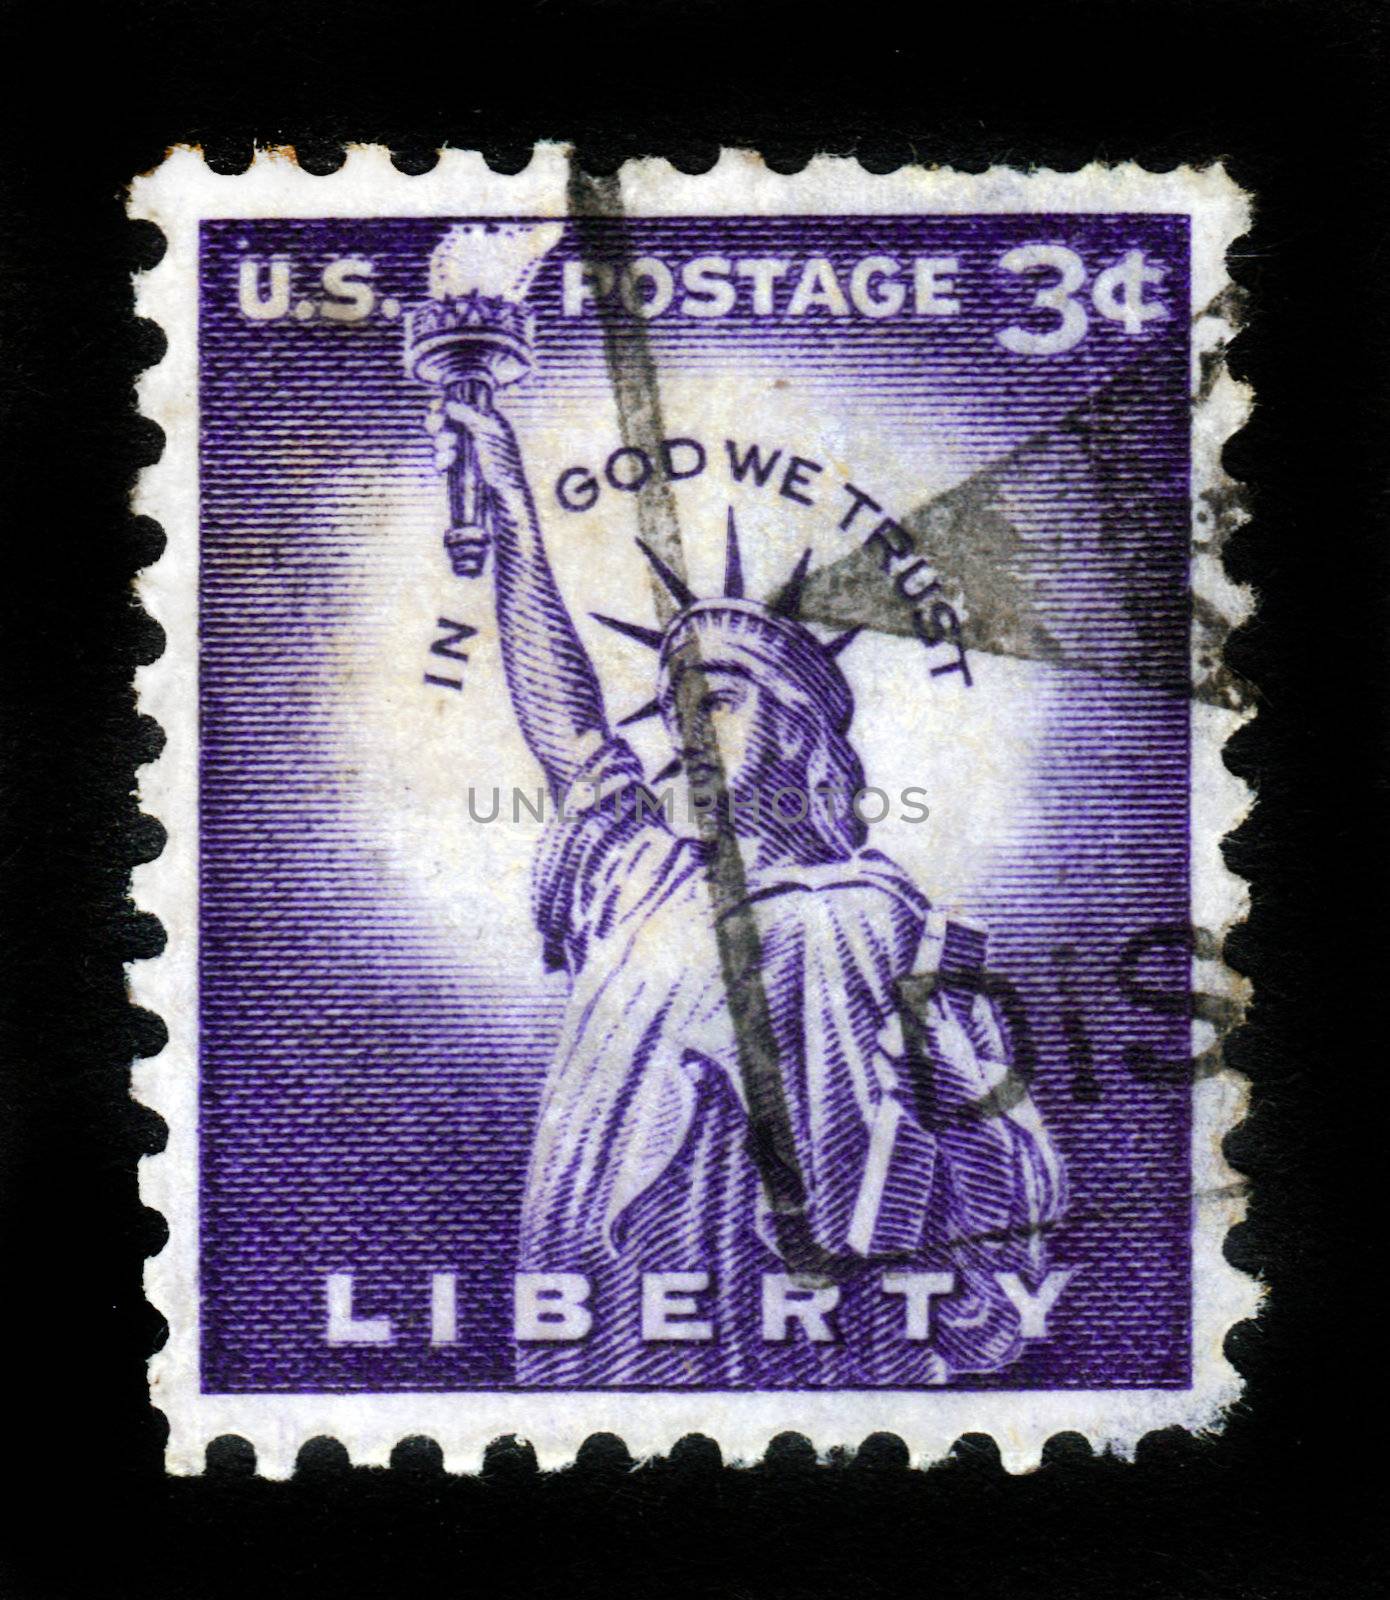 Statue of Liberty on US vintage postmark by irisphoto4